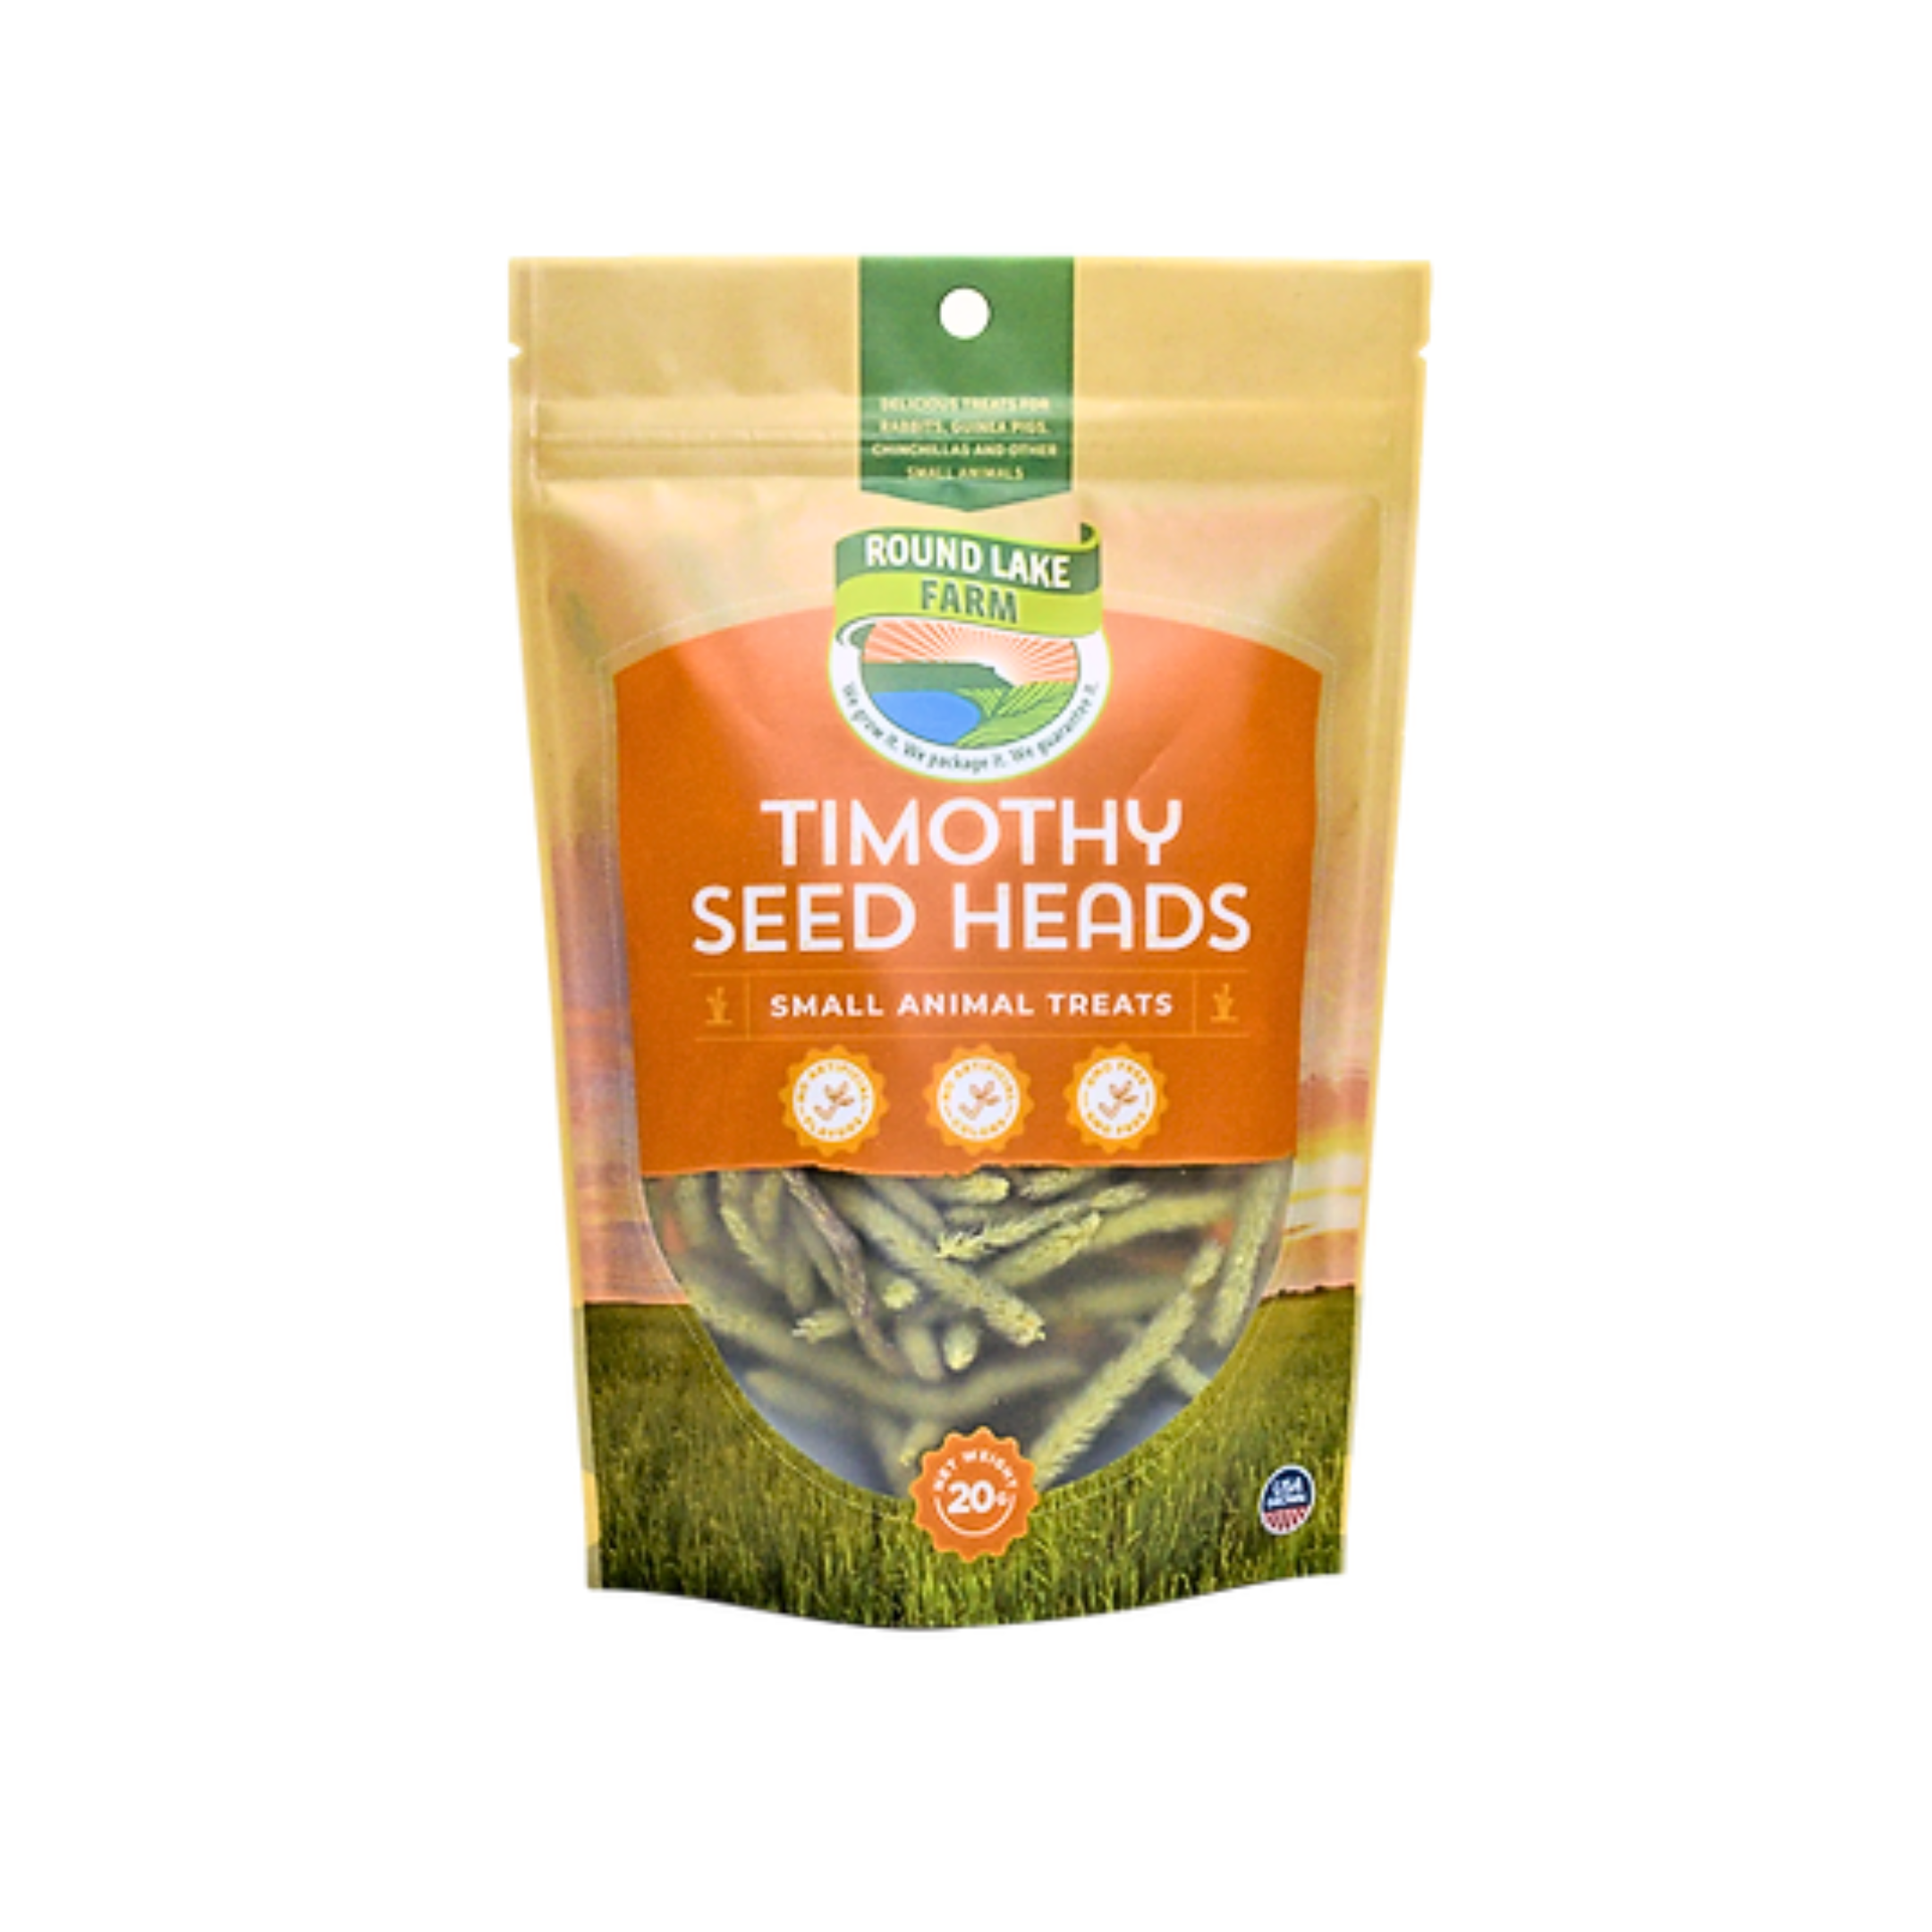 Round Lake Farm Timothy Seed Head Treats